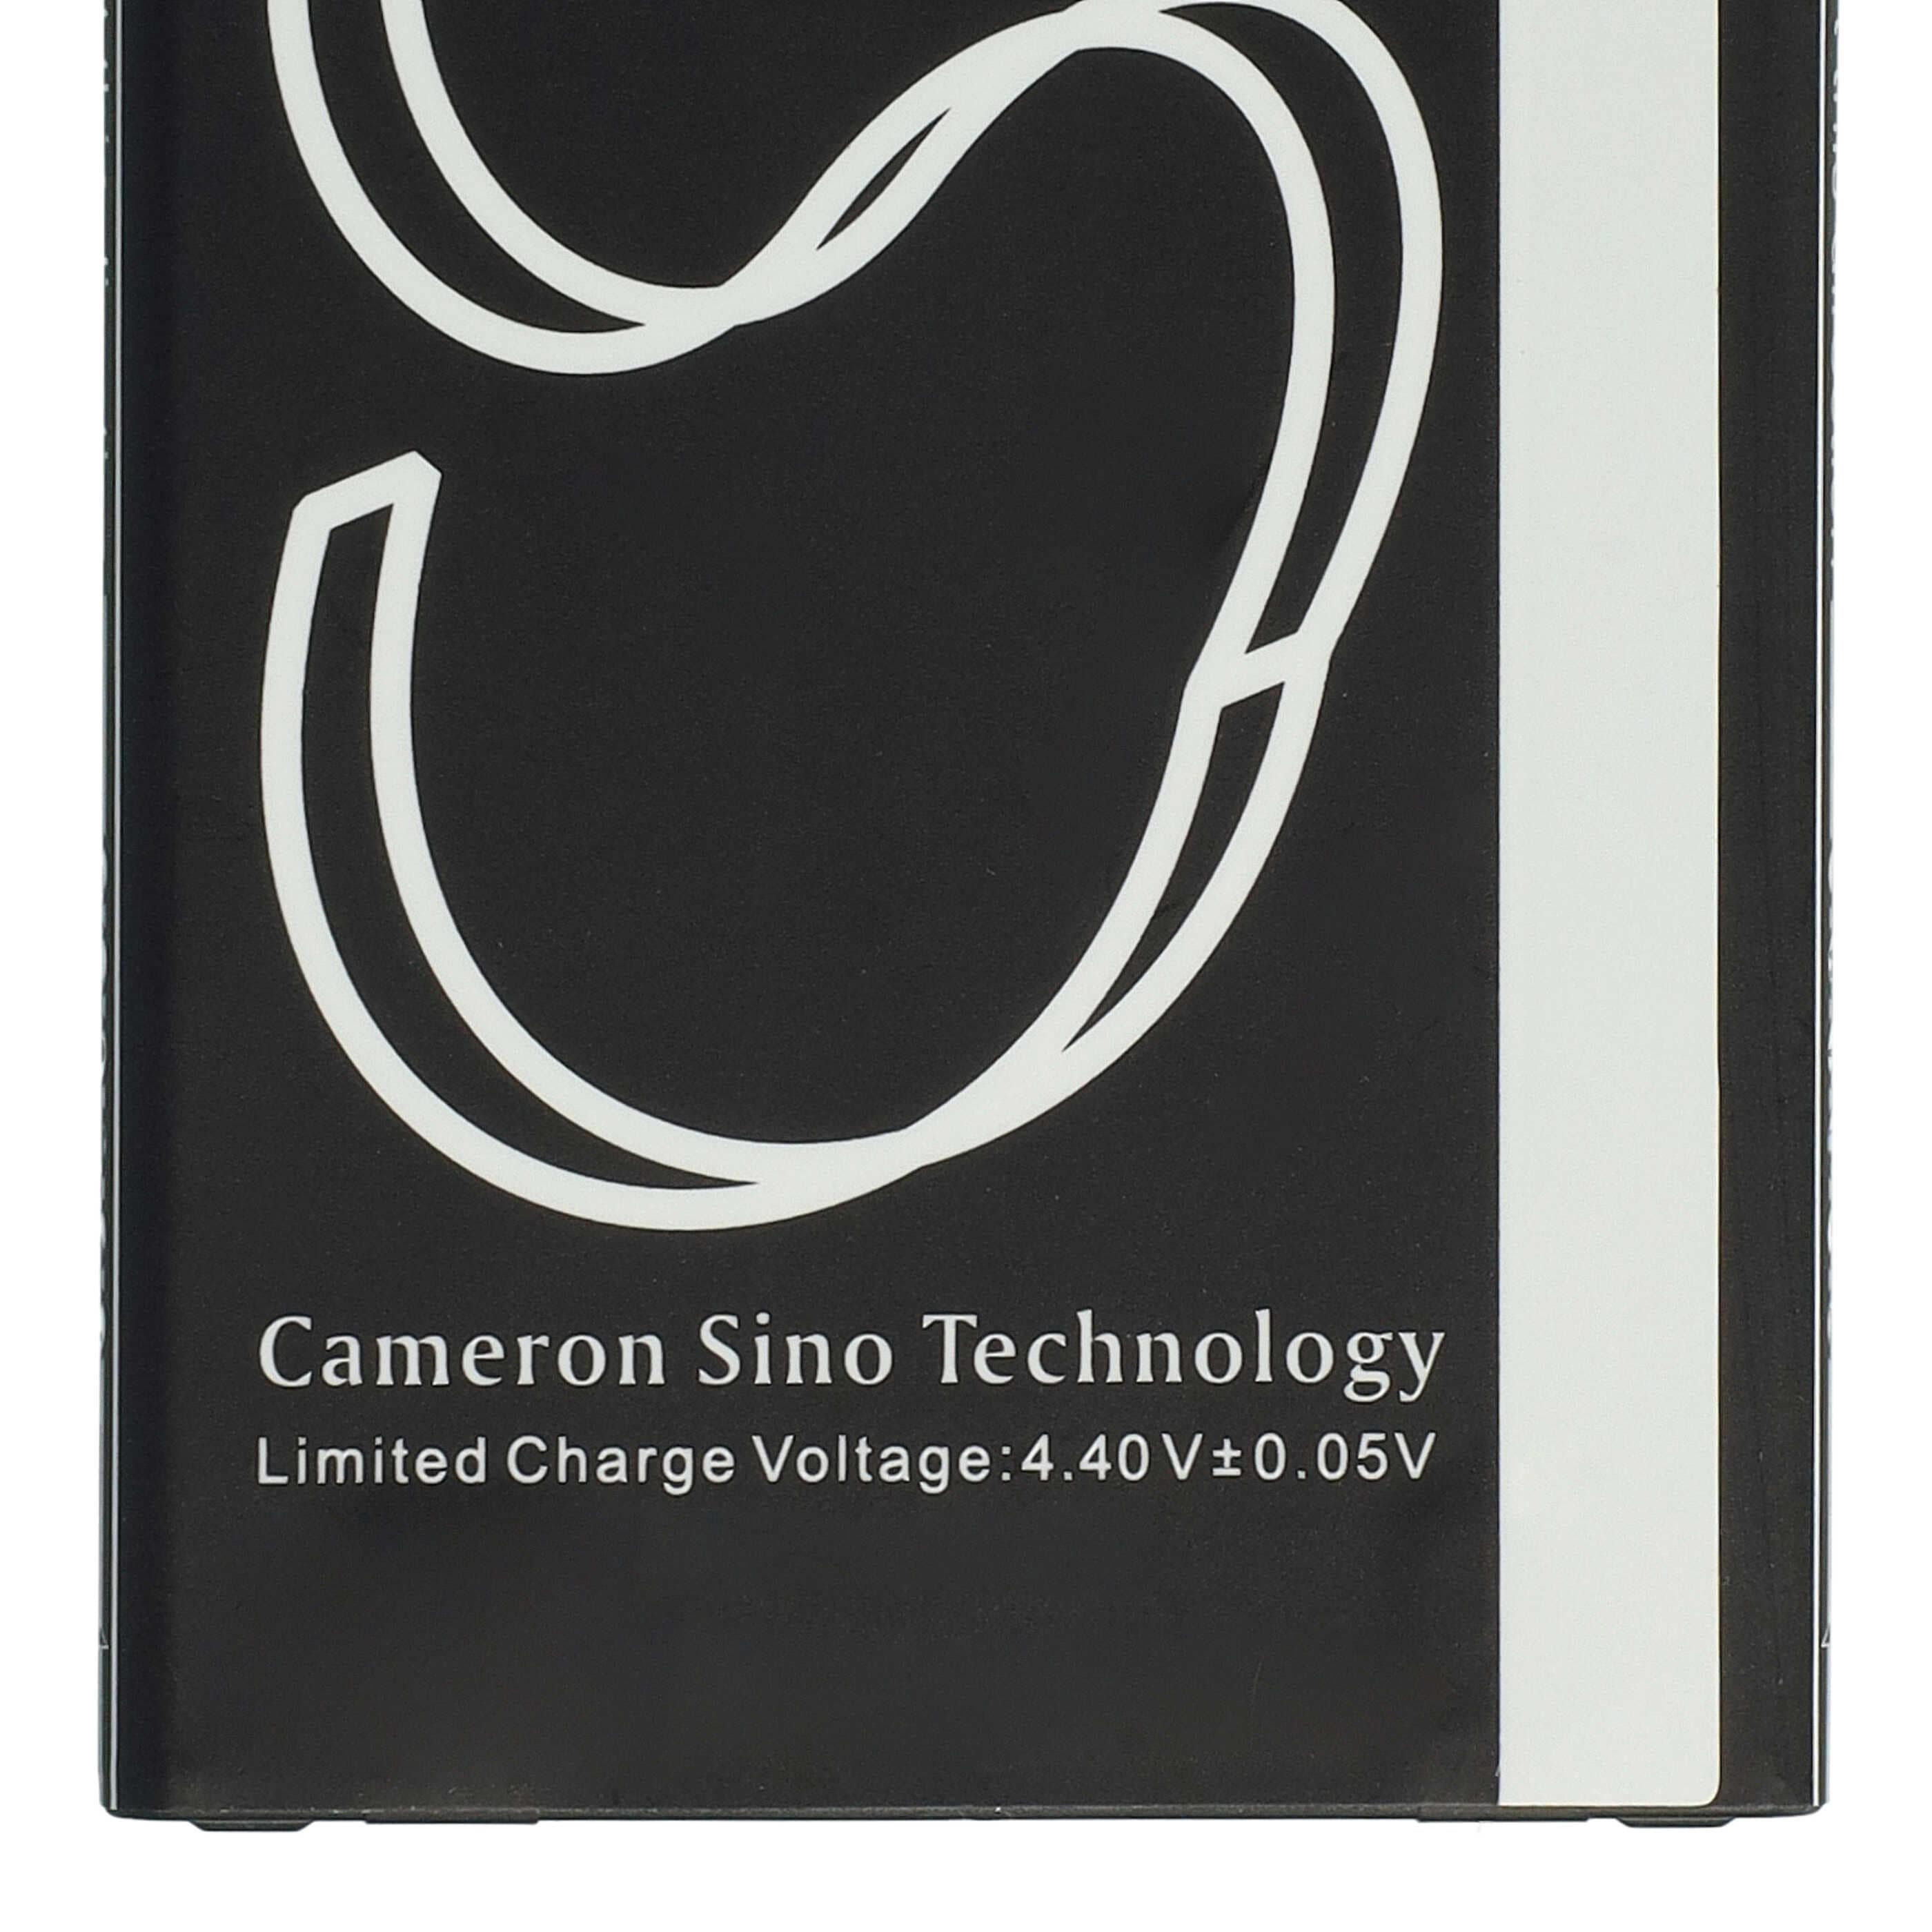 Akumulator bateria do telefonu smartfona zam. LG BL-45F1F, EAC63361401, EAC63321601 - 2000mAh, 3,85V, Li-Ion